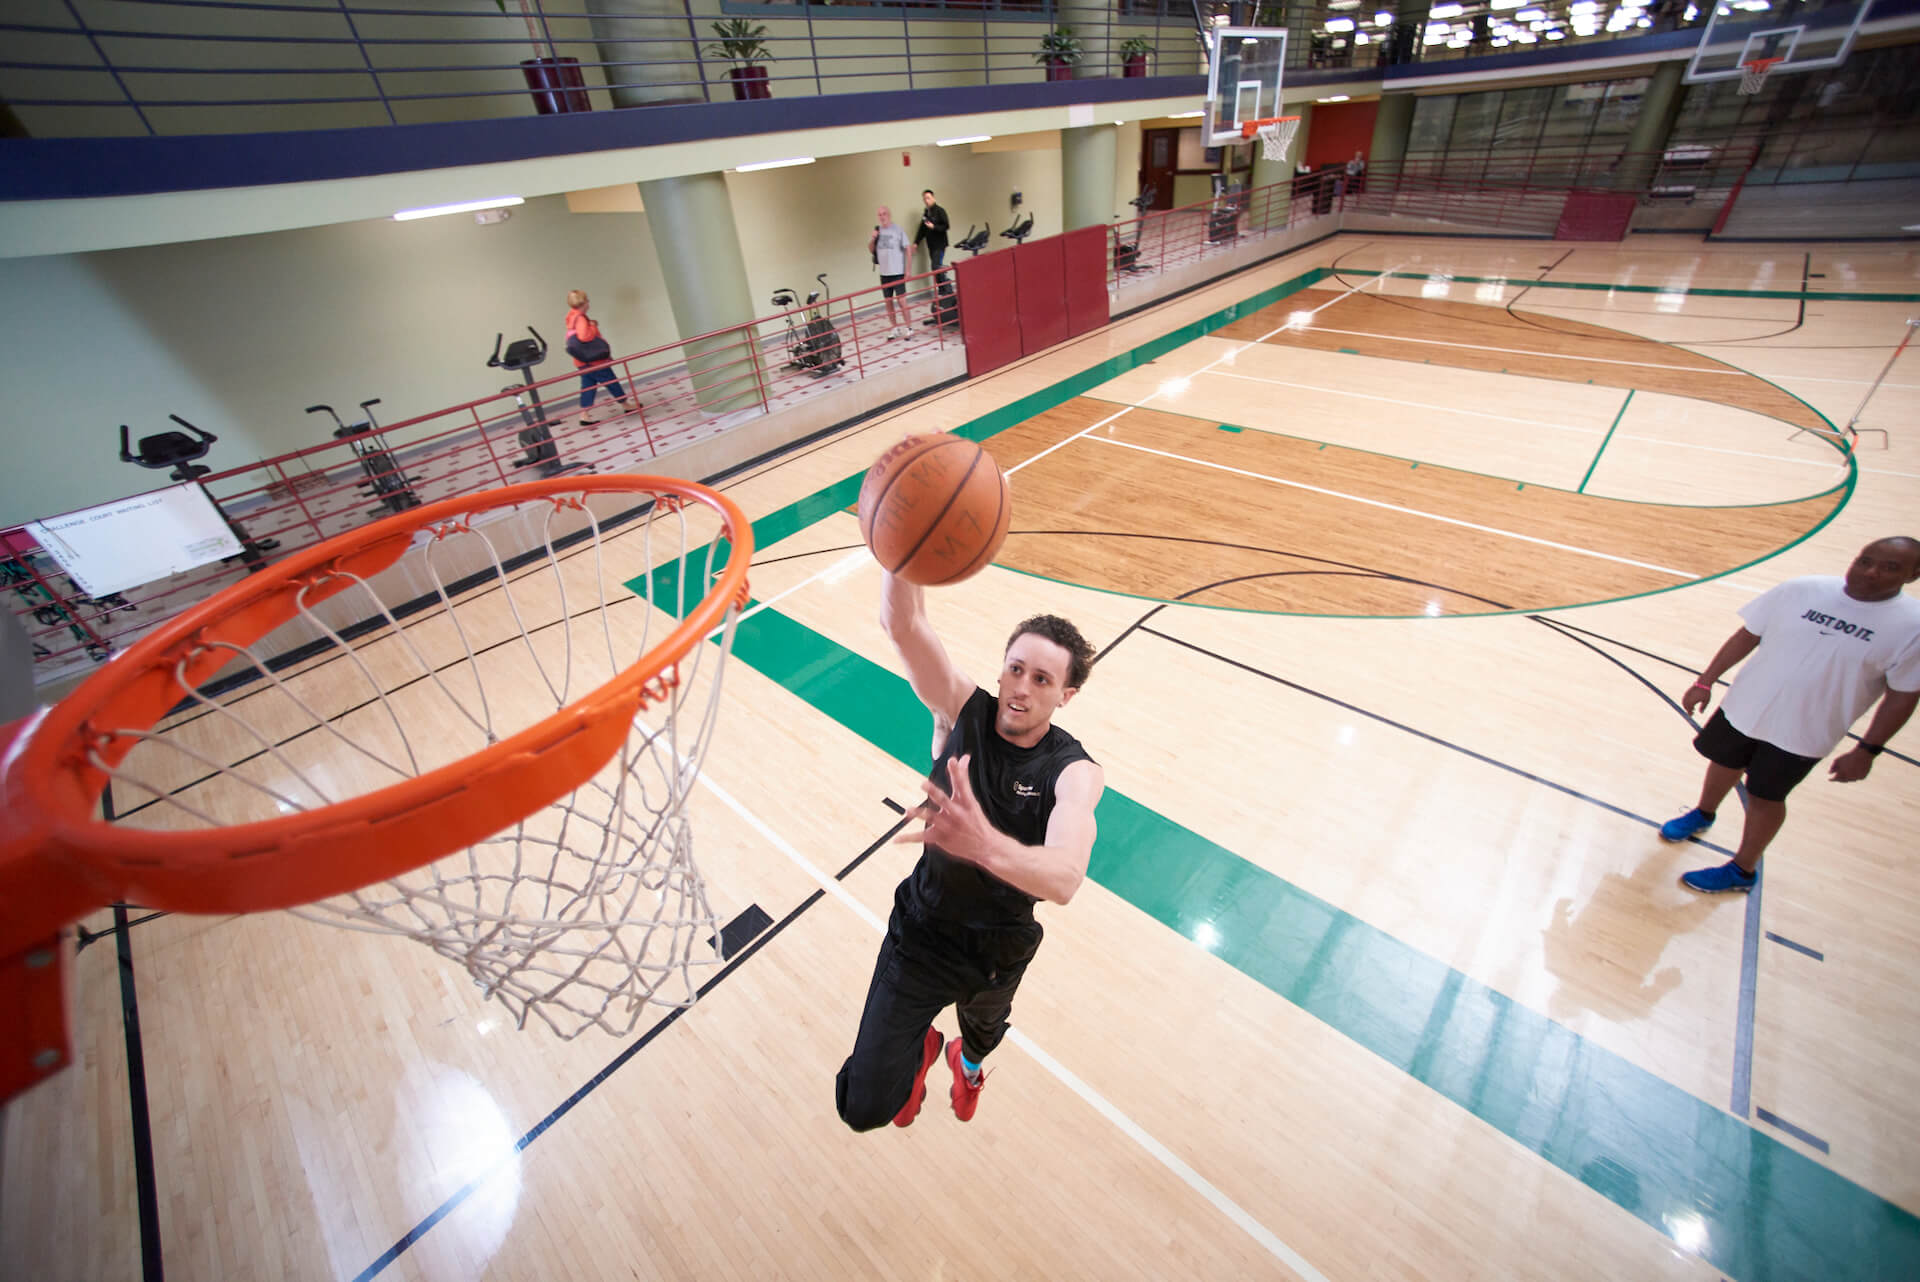 Sparrow MAC Basketball Courts